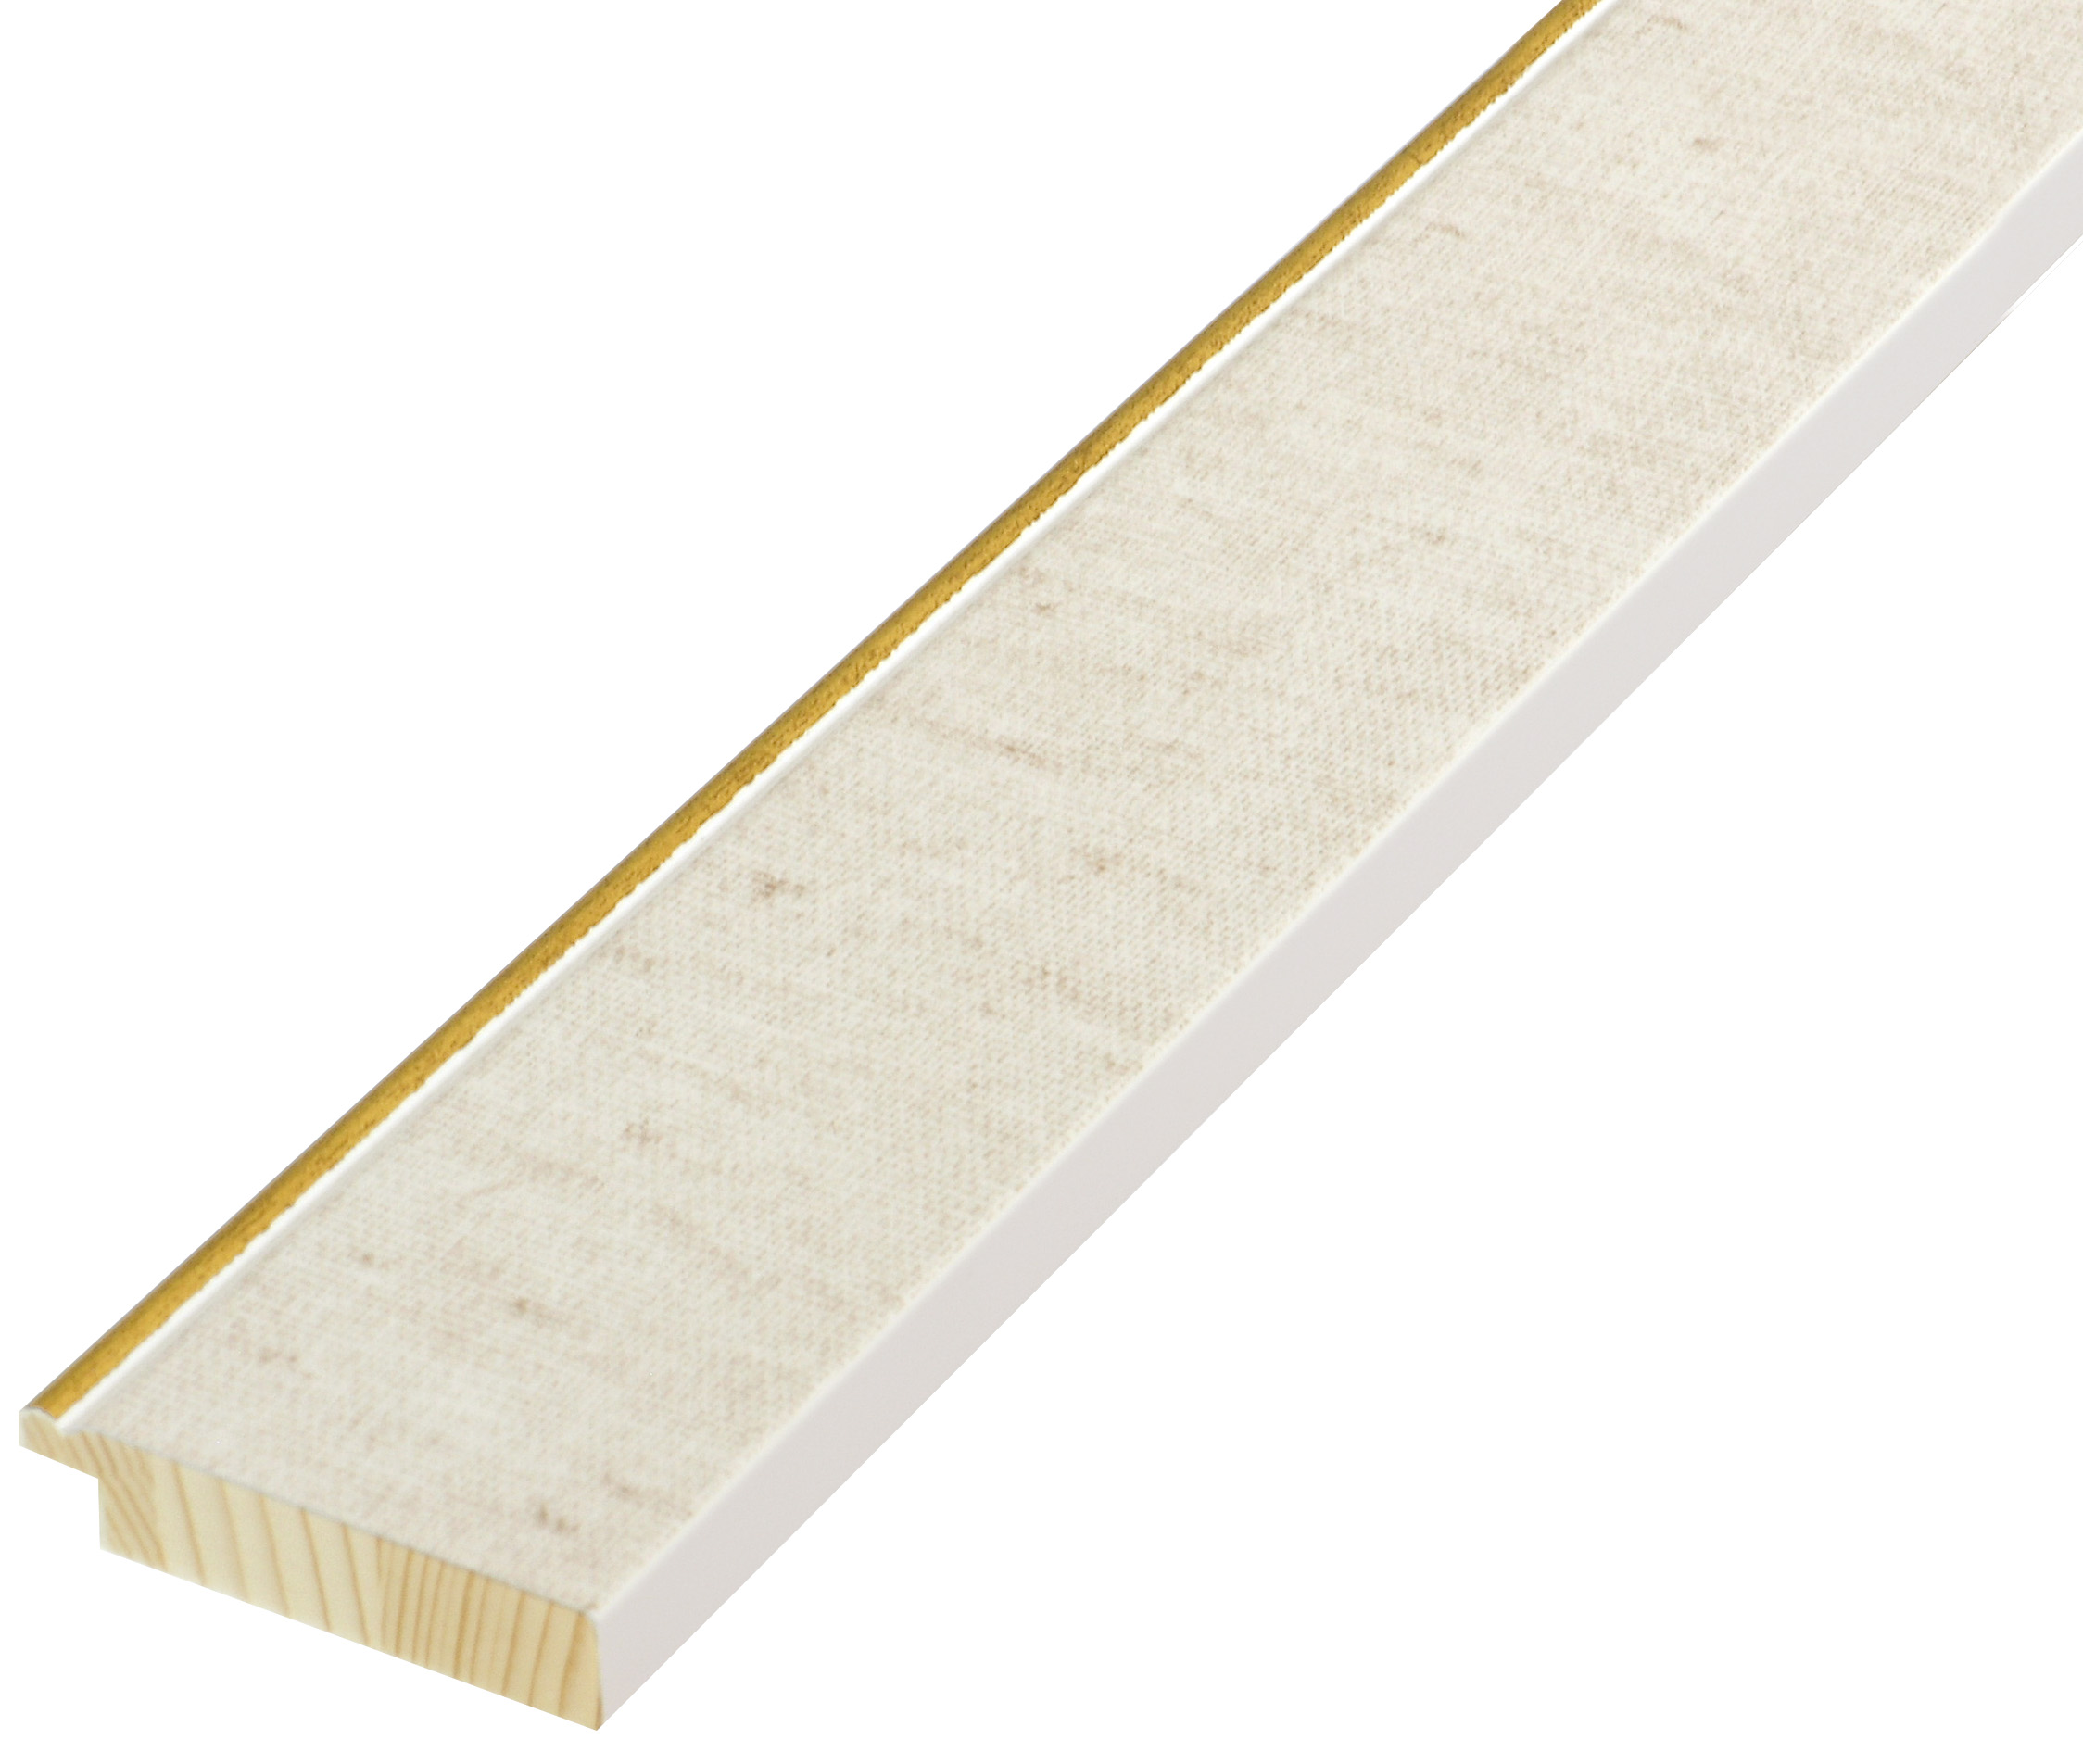 Liner lamellar pine 45mm - flat, fabric effect, gold edge